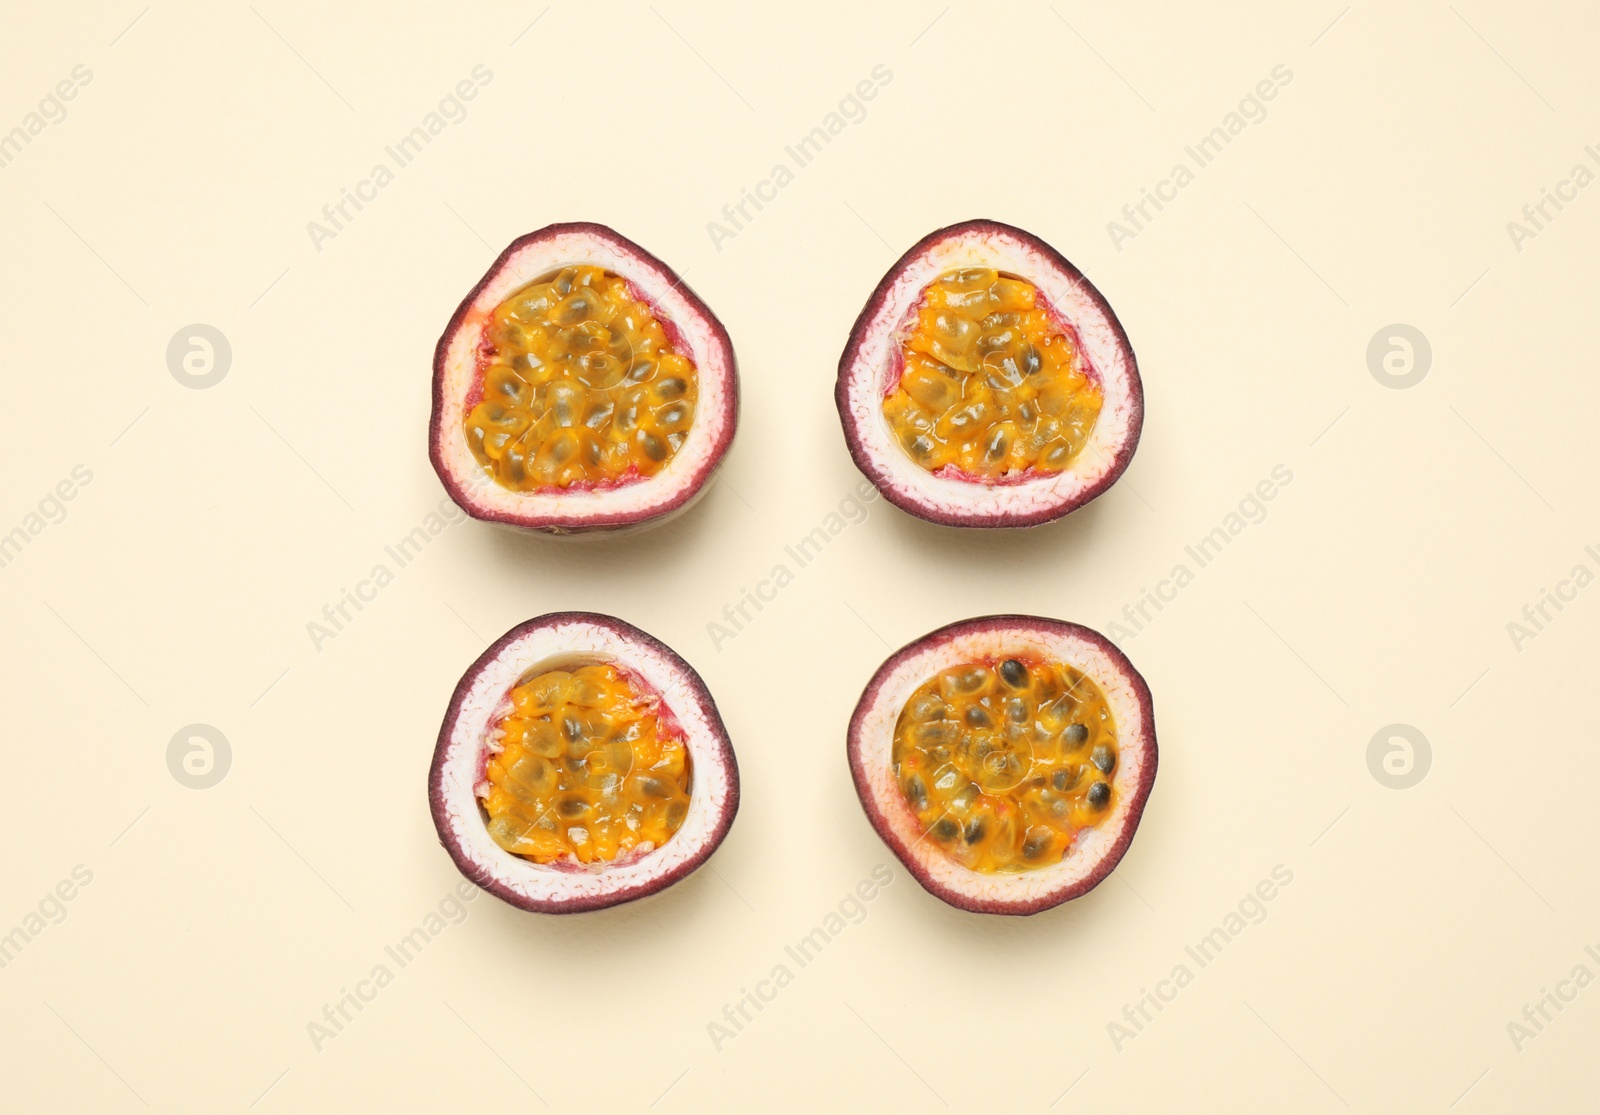 Photo of Halves of fresh ripe passion fruits (maracuyas) on beige background, flat lay